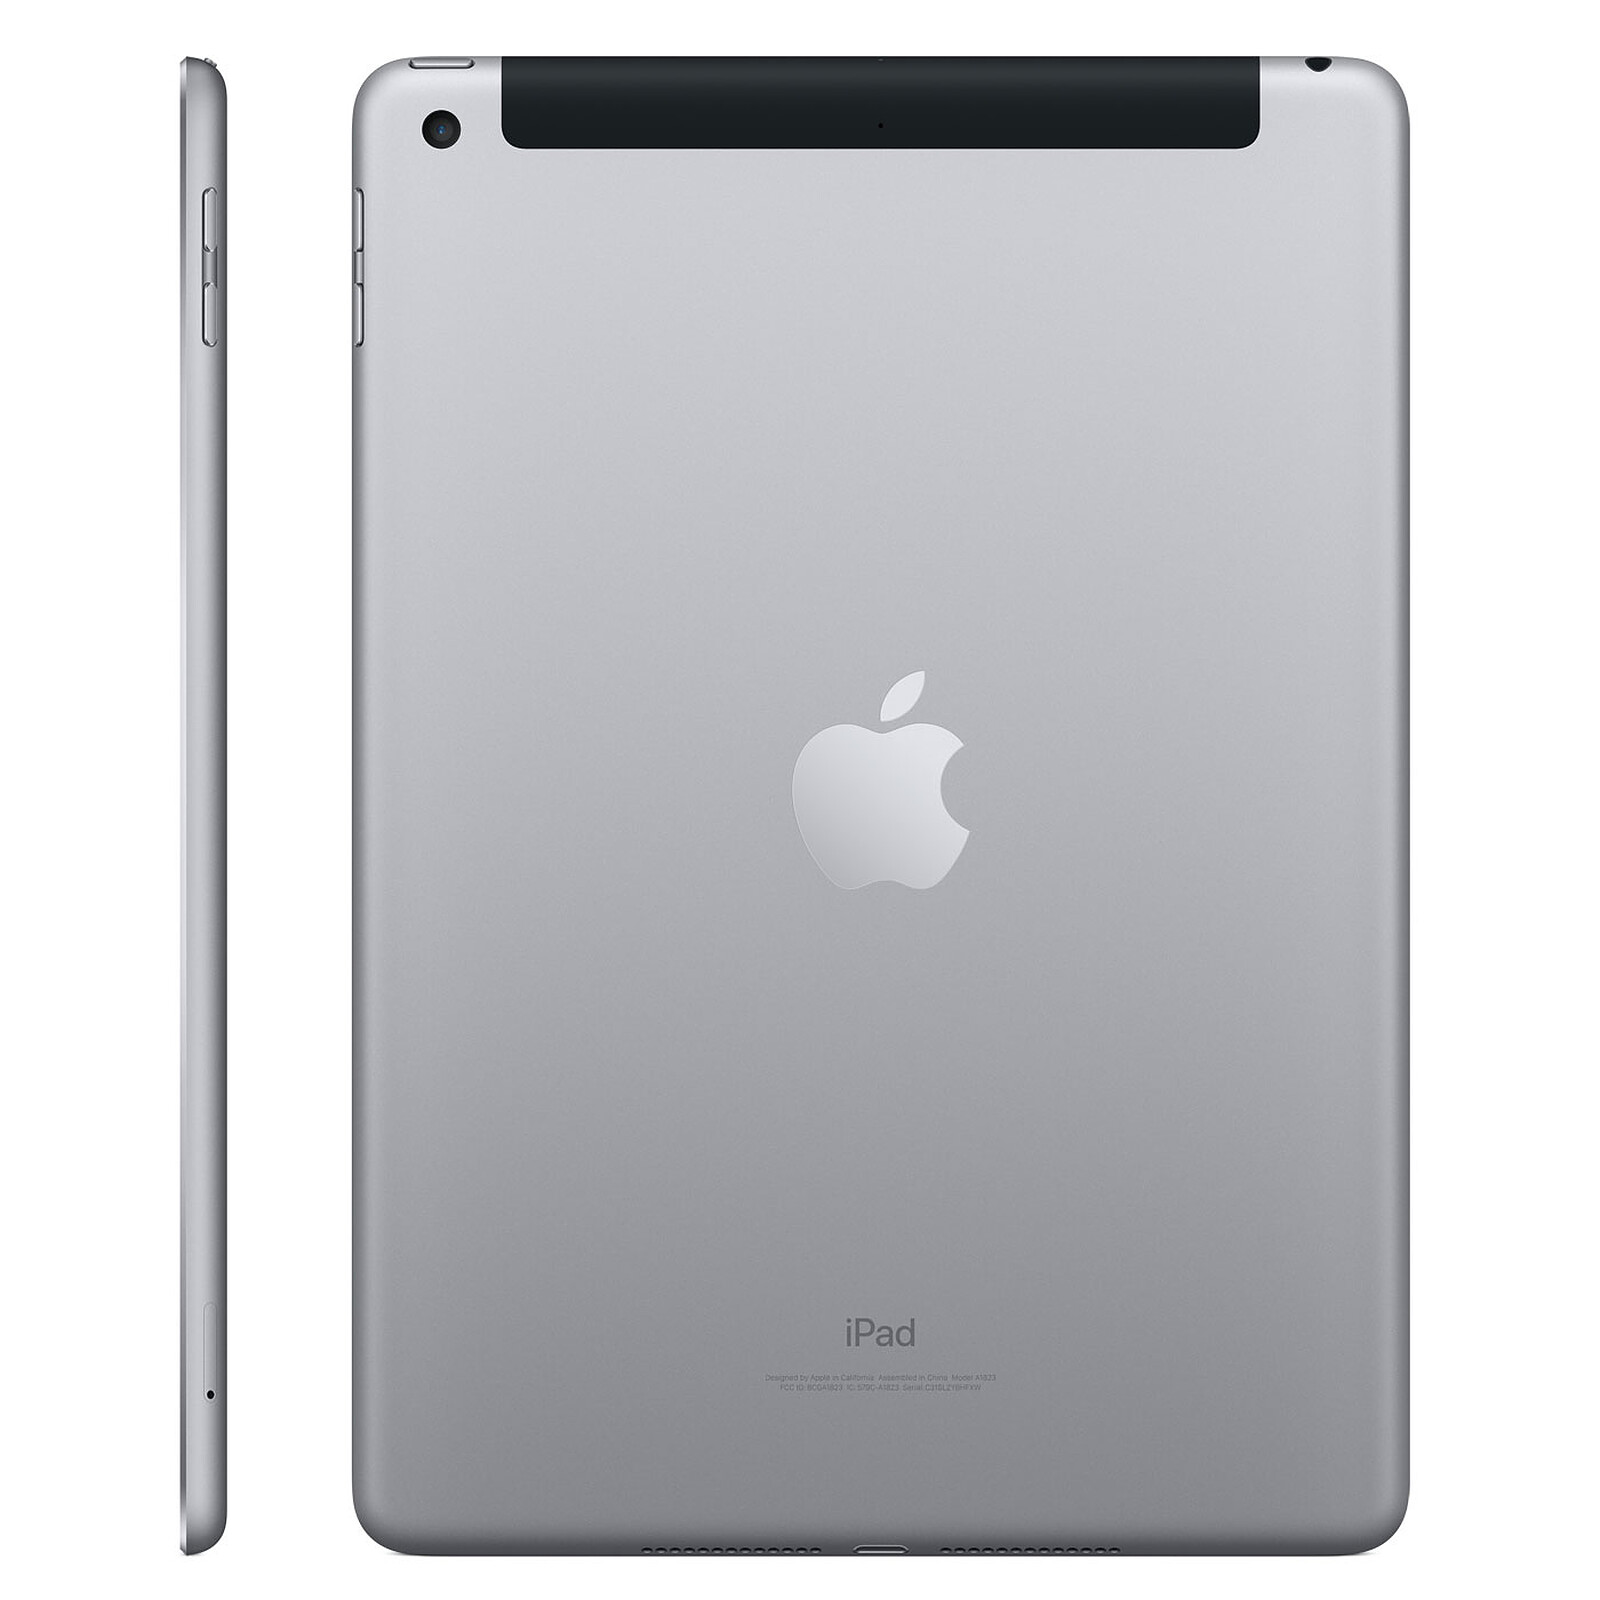 Apple iPad (2018) 128 GB Wi-Fi + Cellular Space Grey - Tablet